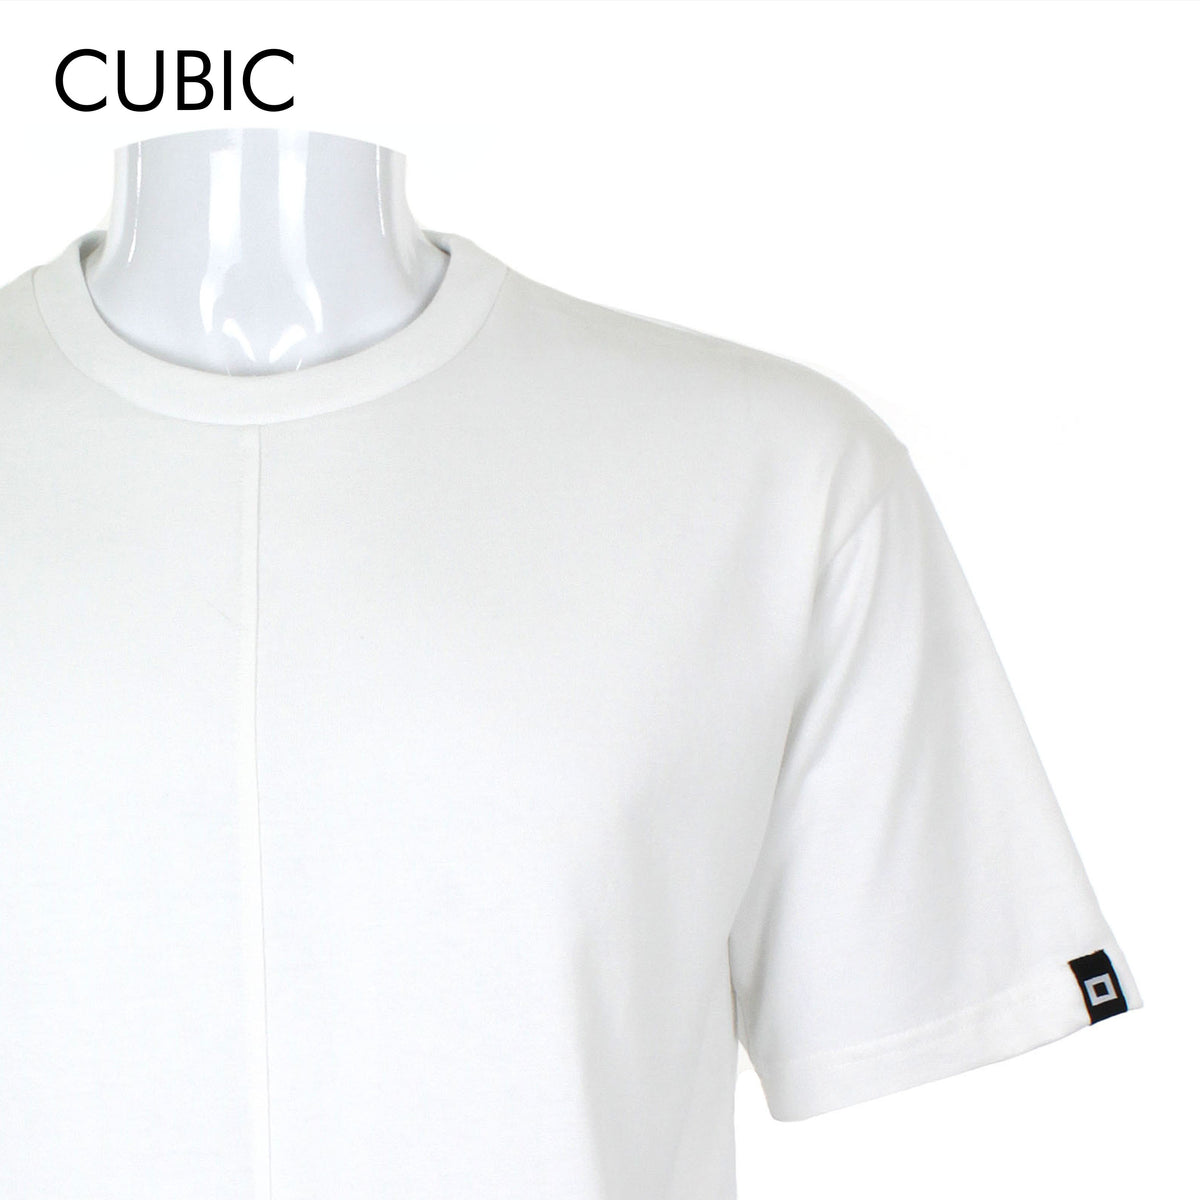 Cubic Men Plain Oversized Boxy Tee / Box Fit T shirt Top Top for Men - CMH2320R